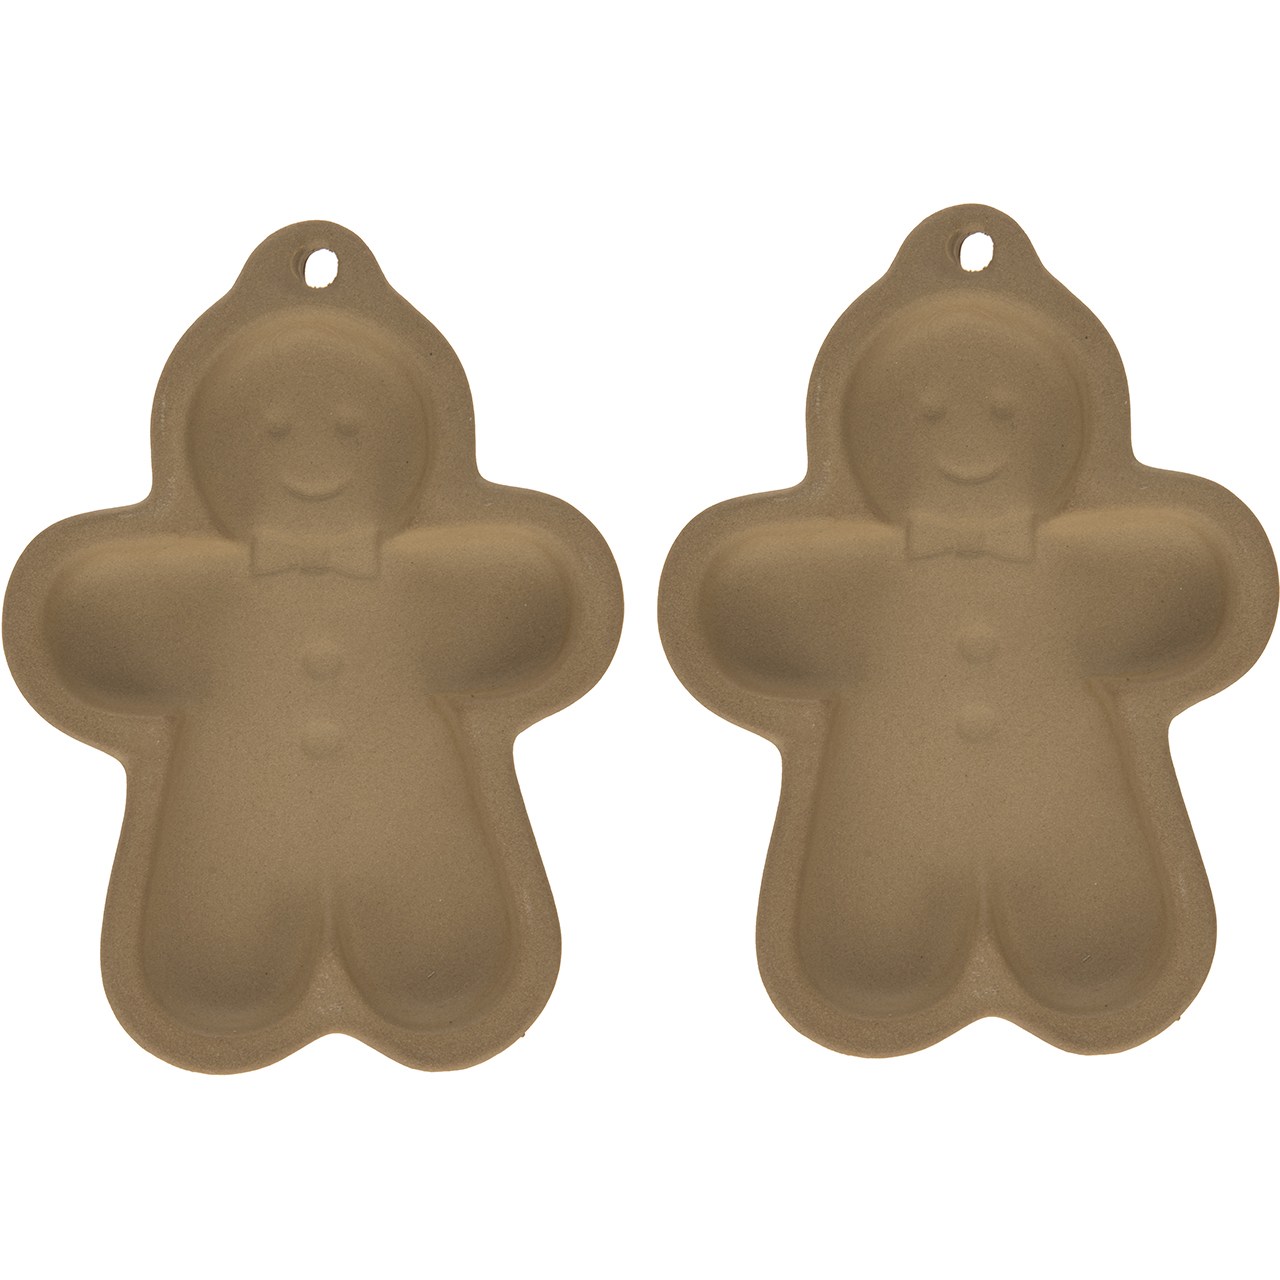 قالب بیسکوییت کیلو مدل NA99 Gingerbread Men - بسته 2 عددی